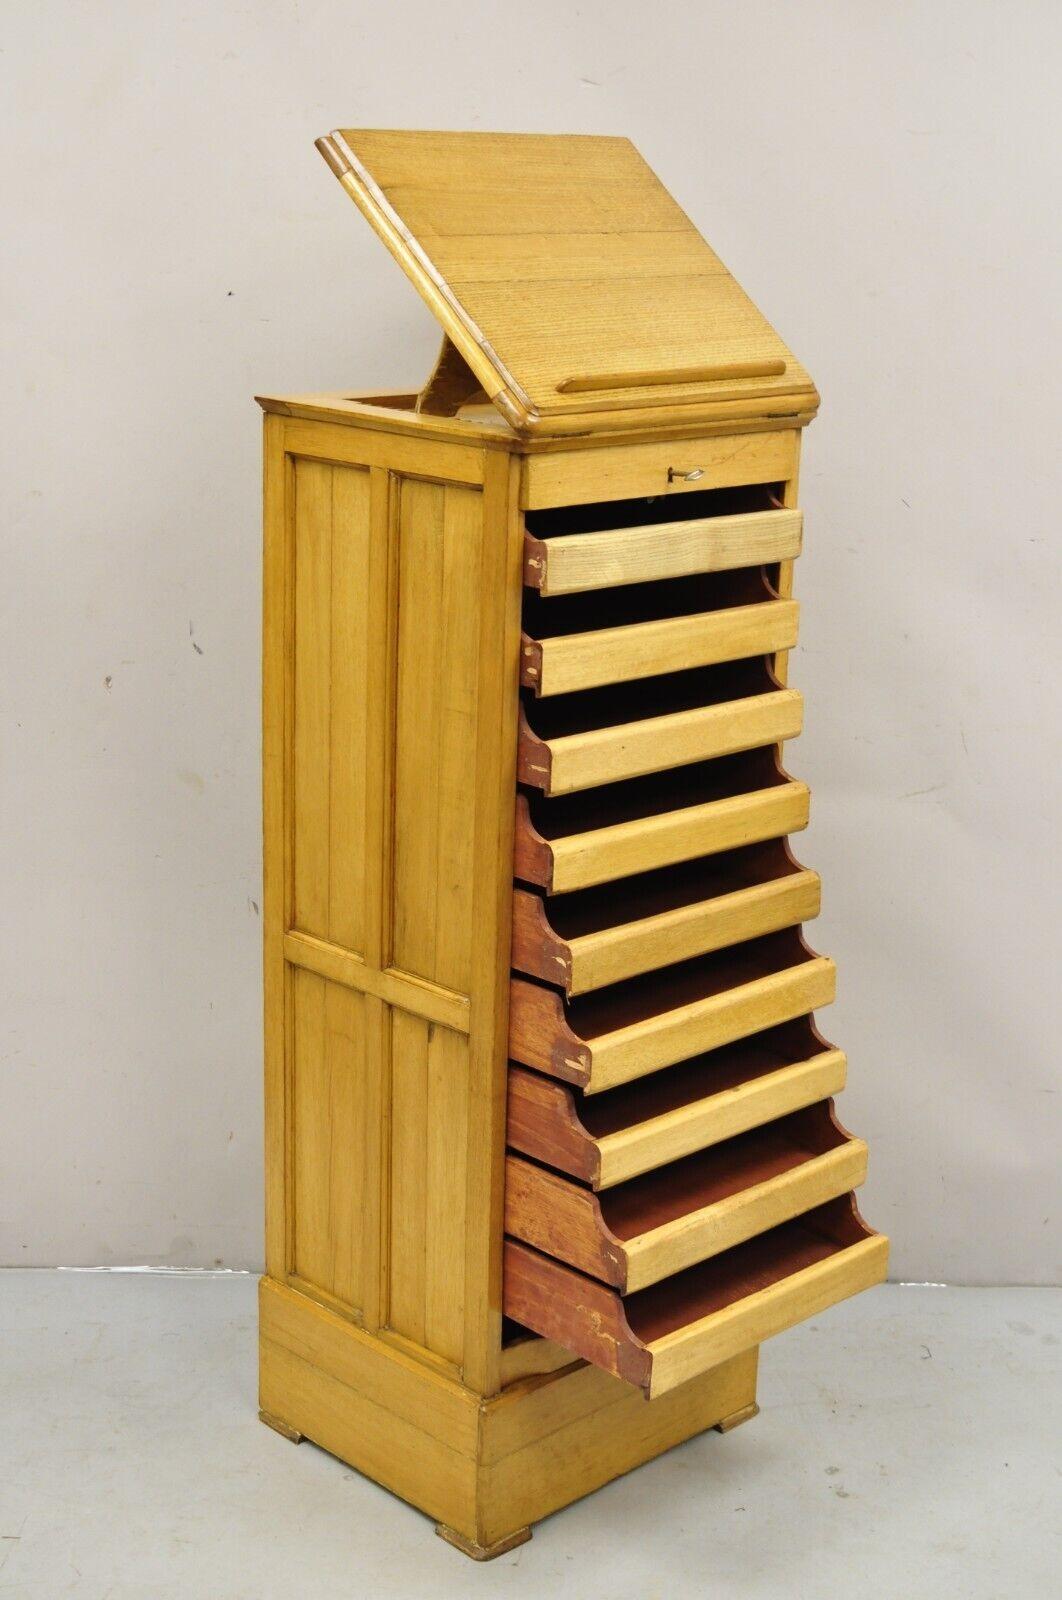 Antique Arts & Crafts Oak & Maple Wood Tambour Shutter Door File Cabinet.  ItemfWorking lock and key, adjustable tilt lectern bookstand top, 9 drawers, very unique antique filing cabinet.
Circa 1900. Measurements: 51